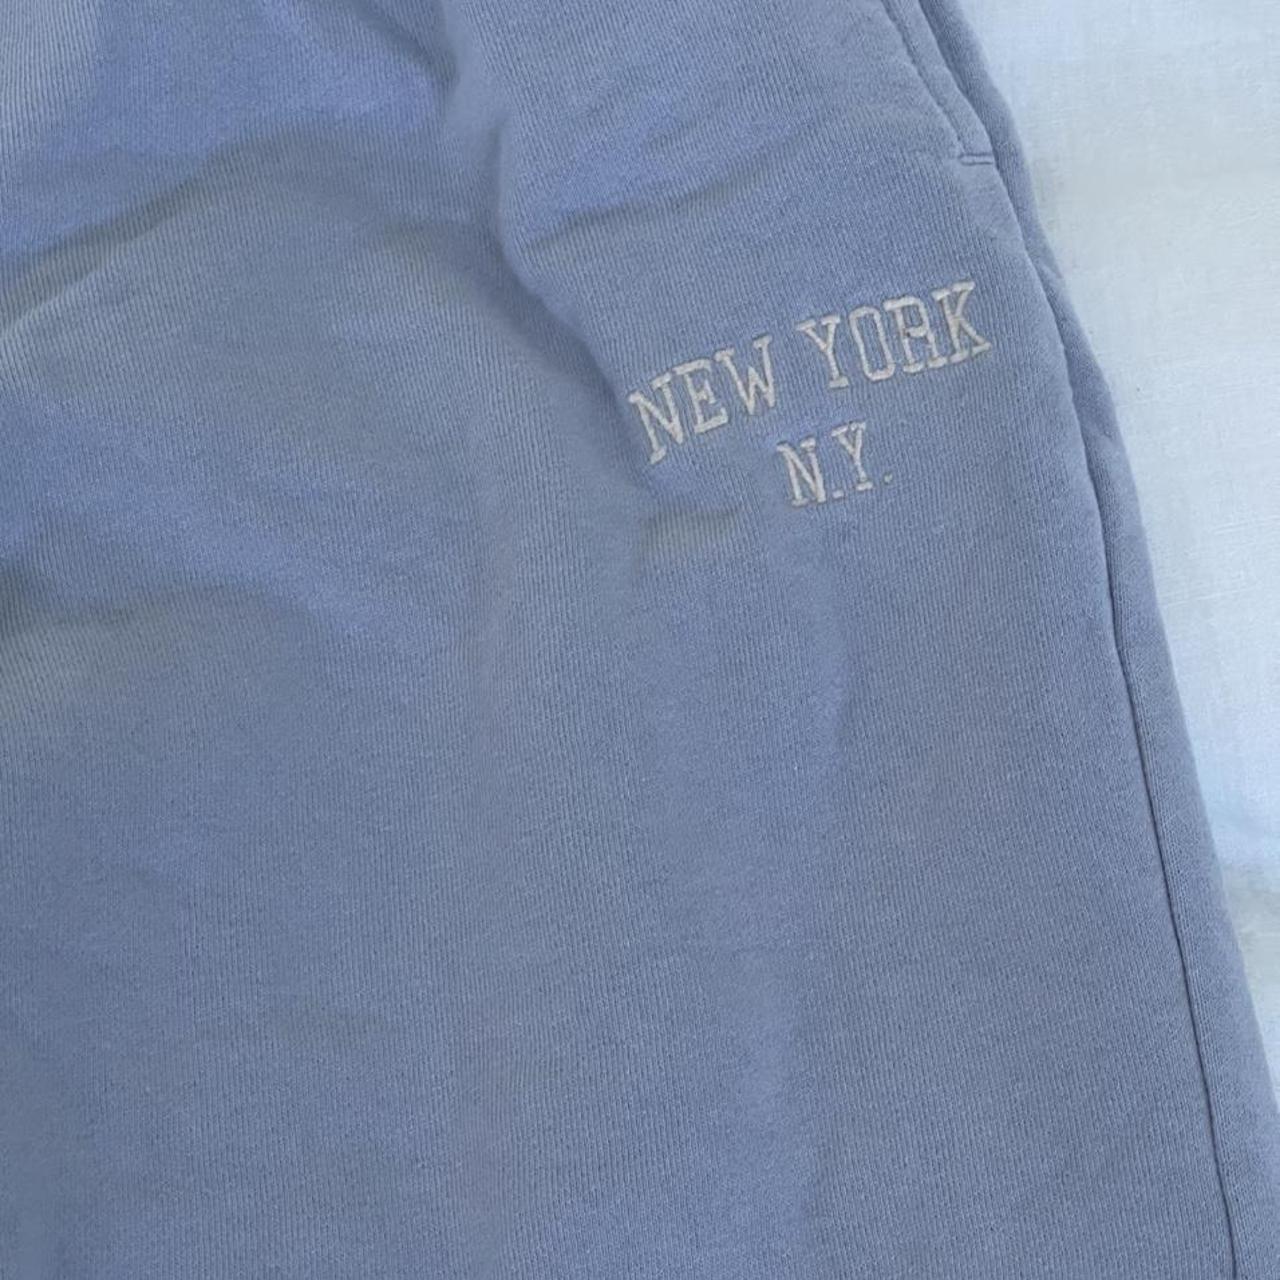 Brandy Melville Rosa New York sweatpants in blue 🖤... - Depop